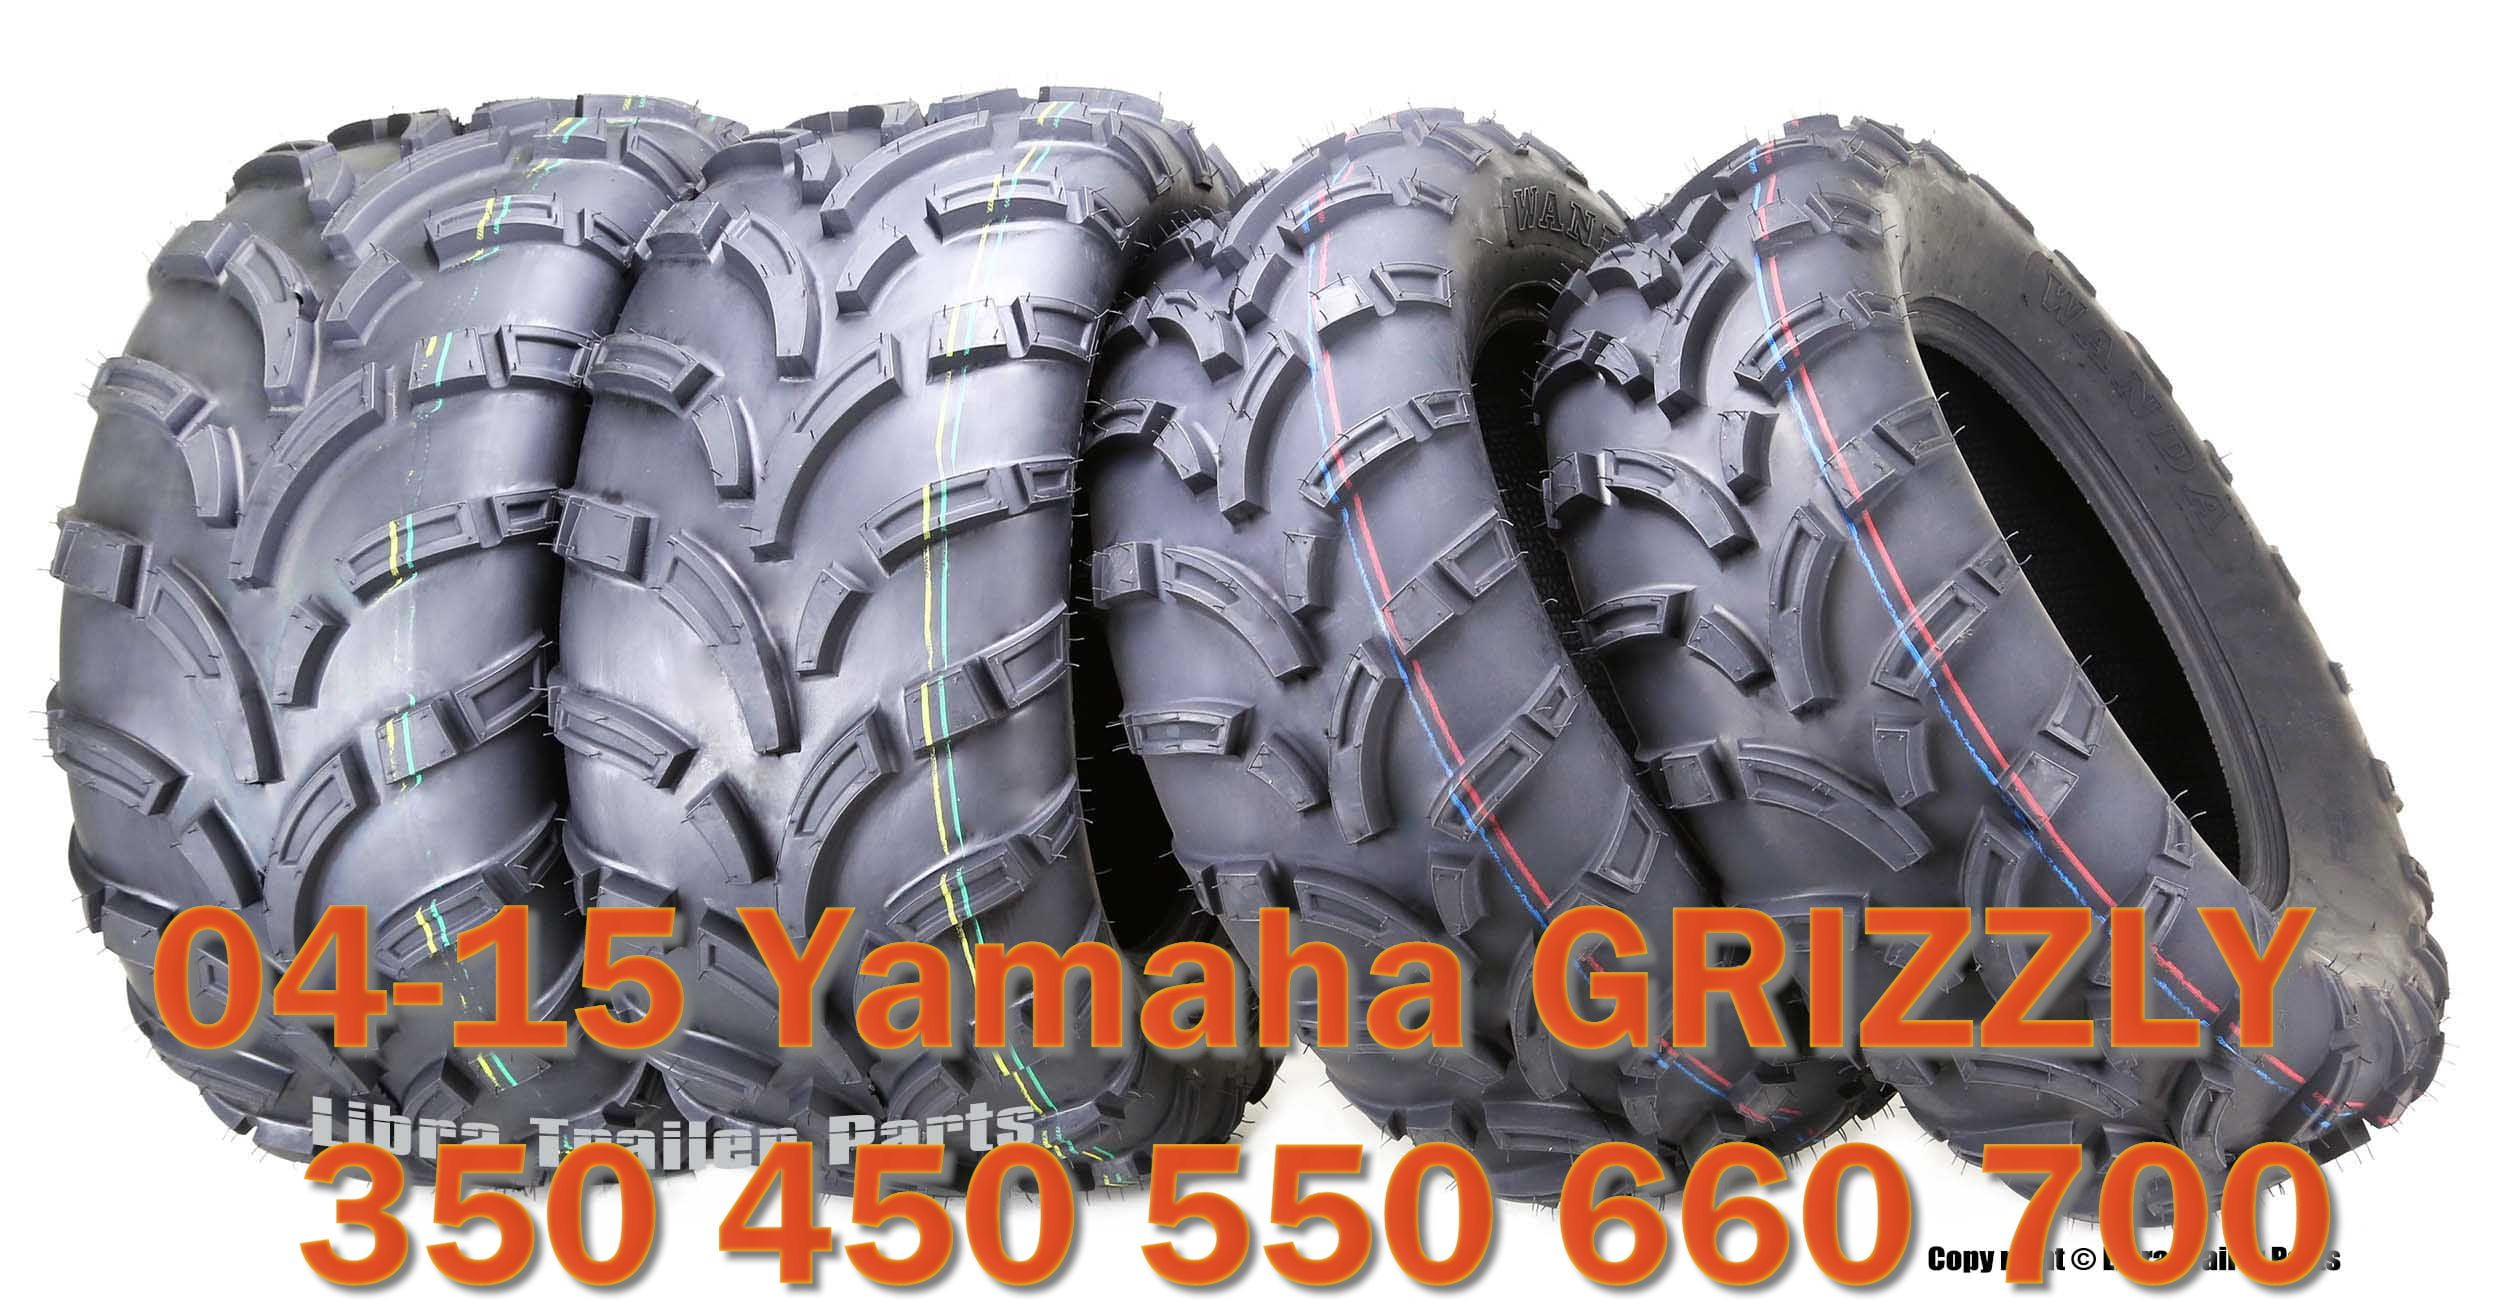 Yamaha yfm660 Grizzly Duro Frontier Allround radial pneu arrière 25x10-12 2 st. 